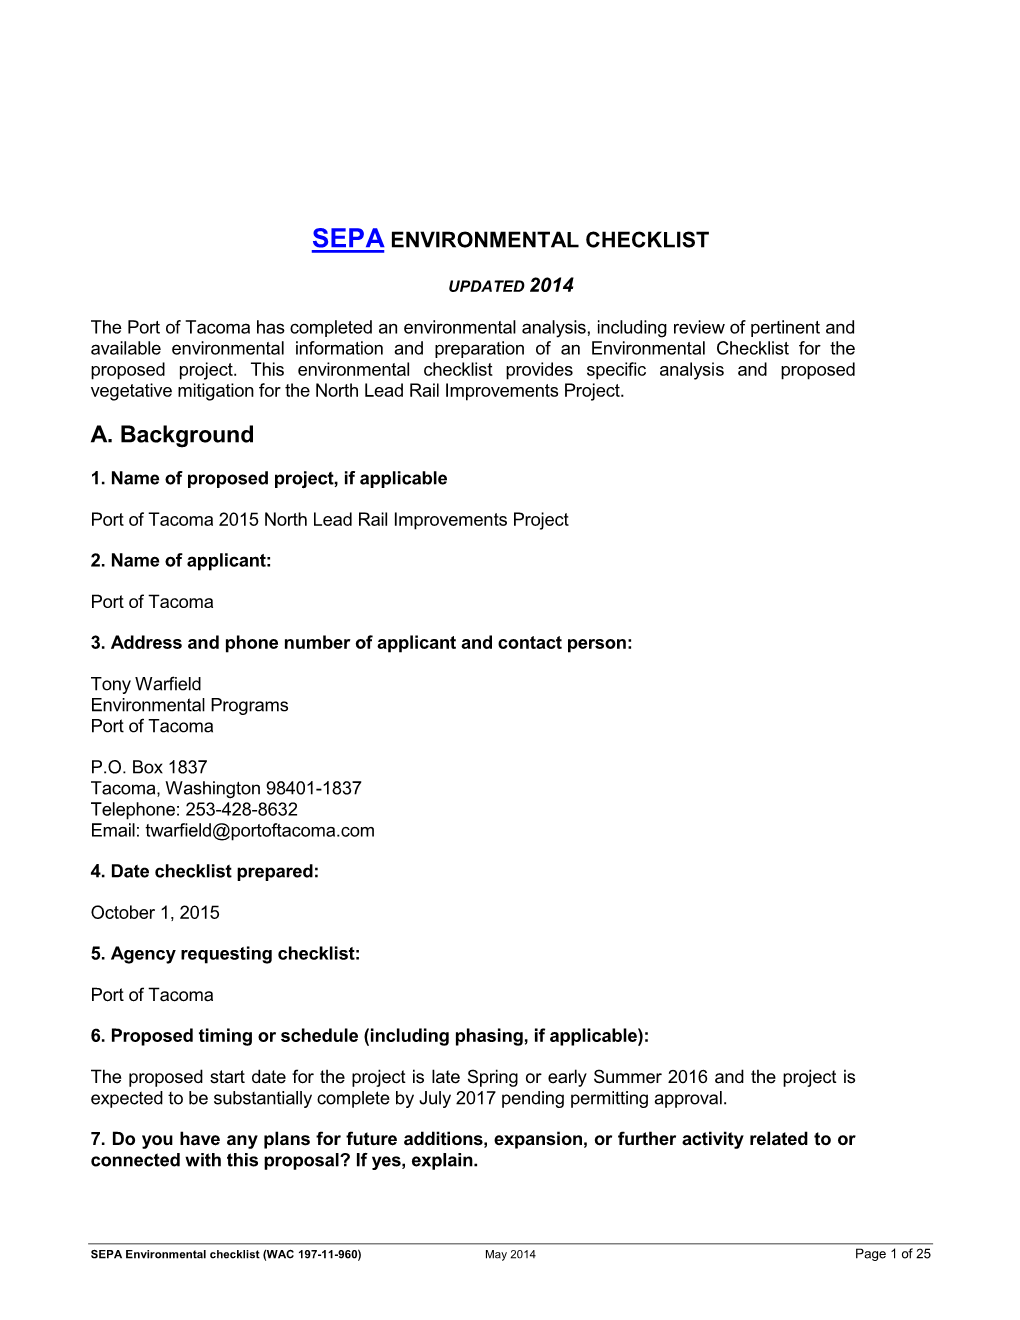 Sepa Environmental Checklist